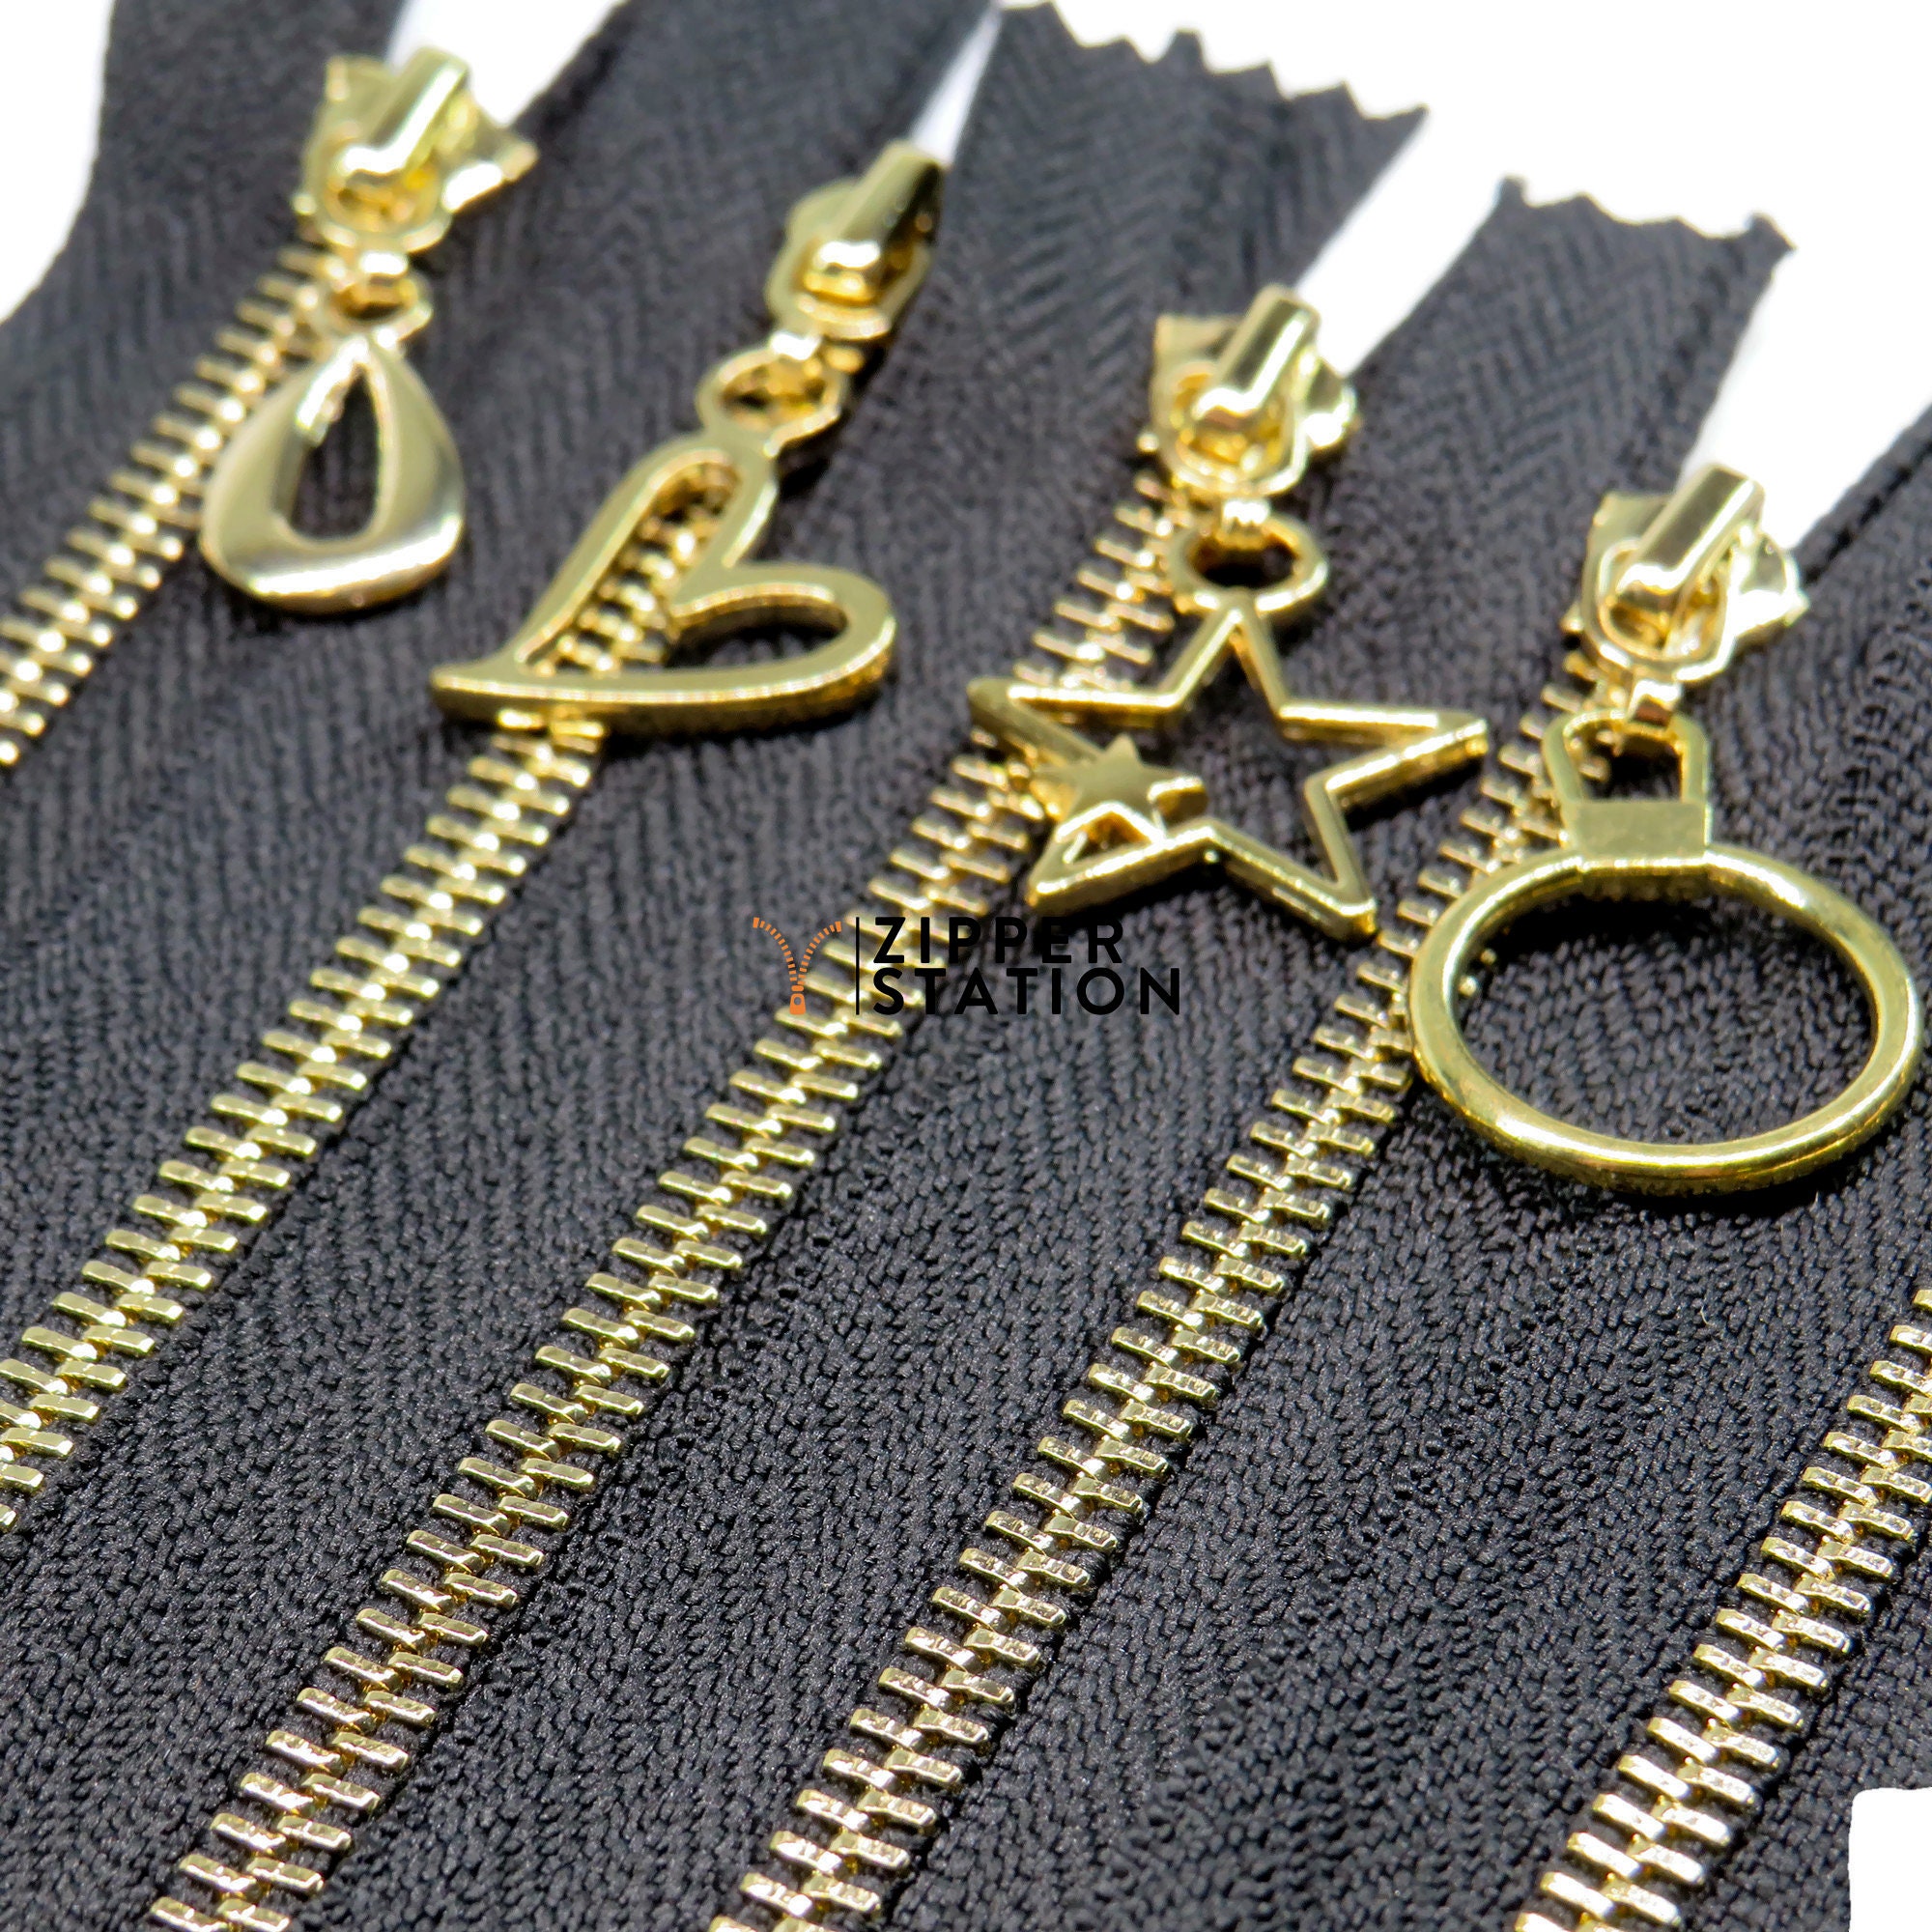 Decorative No3 Zip slides for Nylon Coil Zipper, pulls for